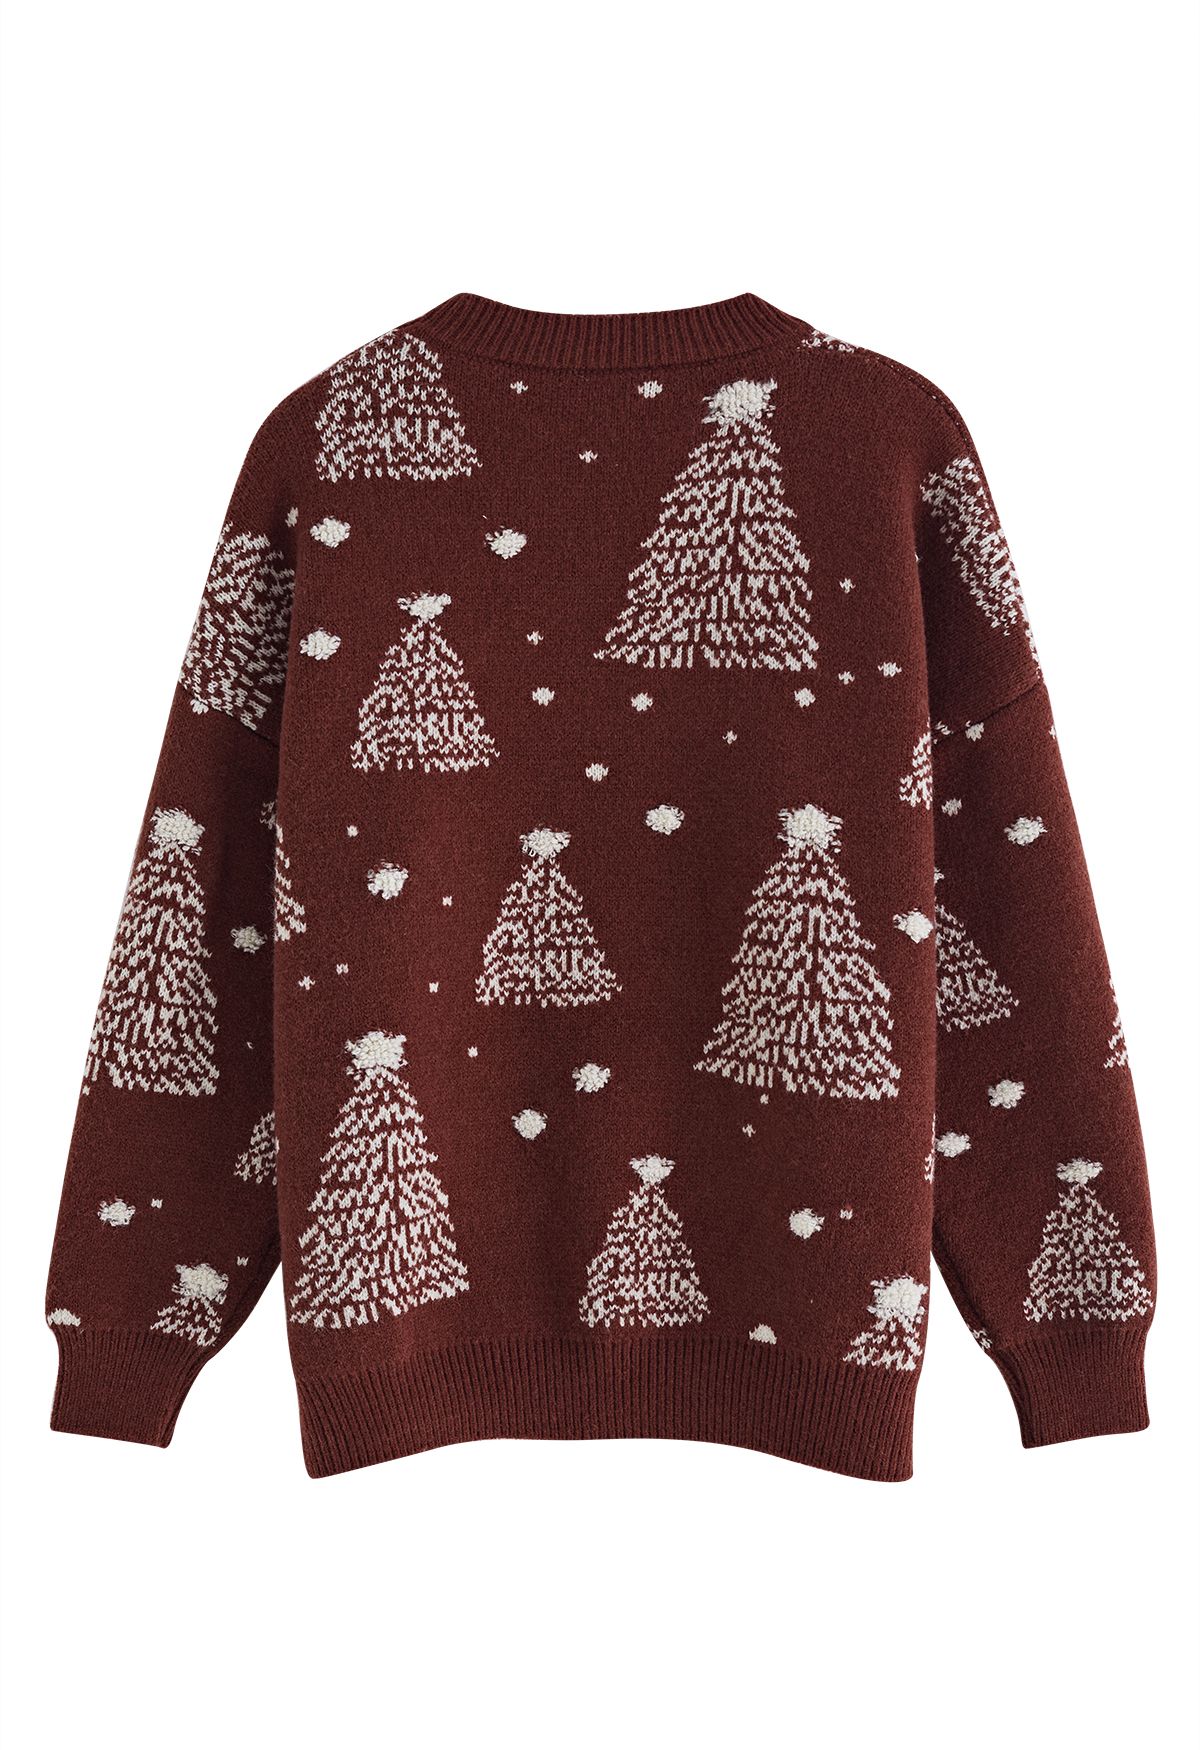 Christmas Tree Pattern Jacquard Knit Sweater in Burgundy